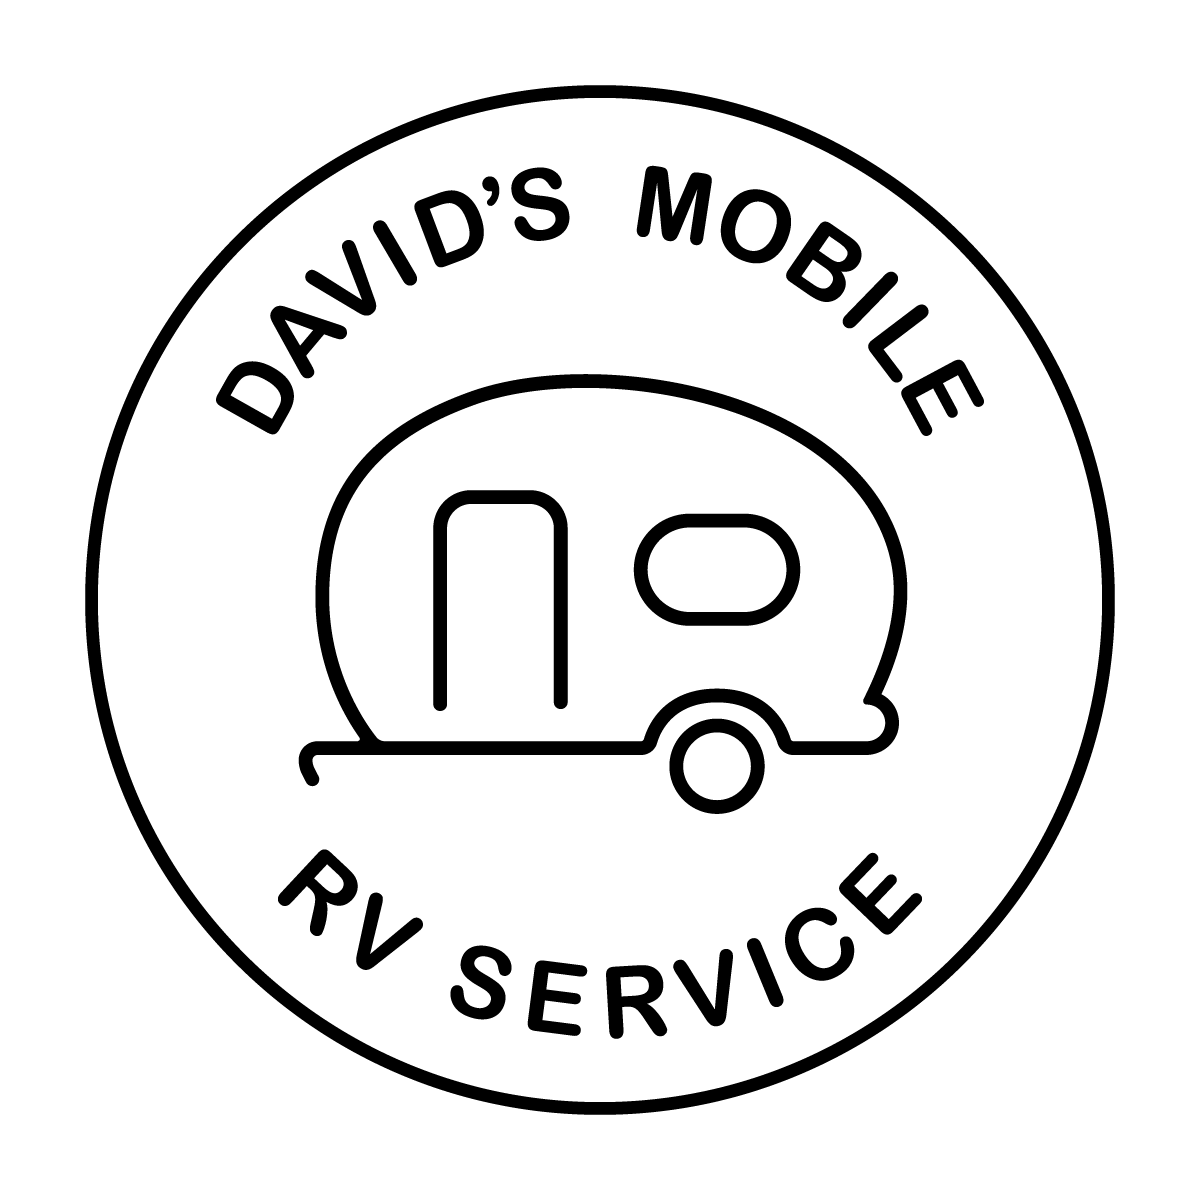 David's Mobile RV Service